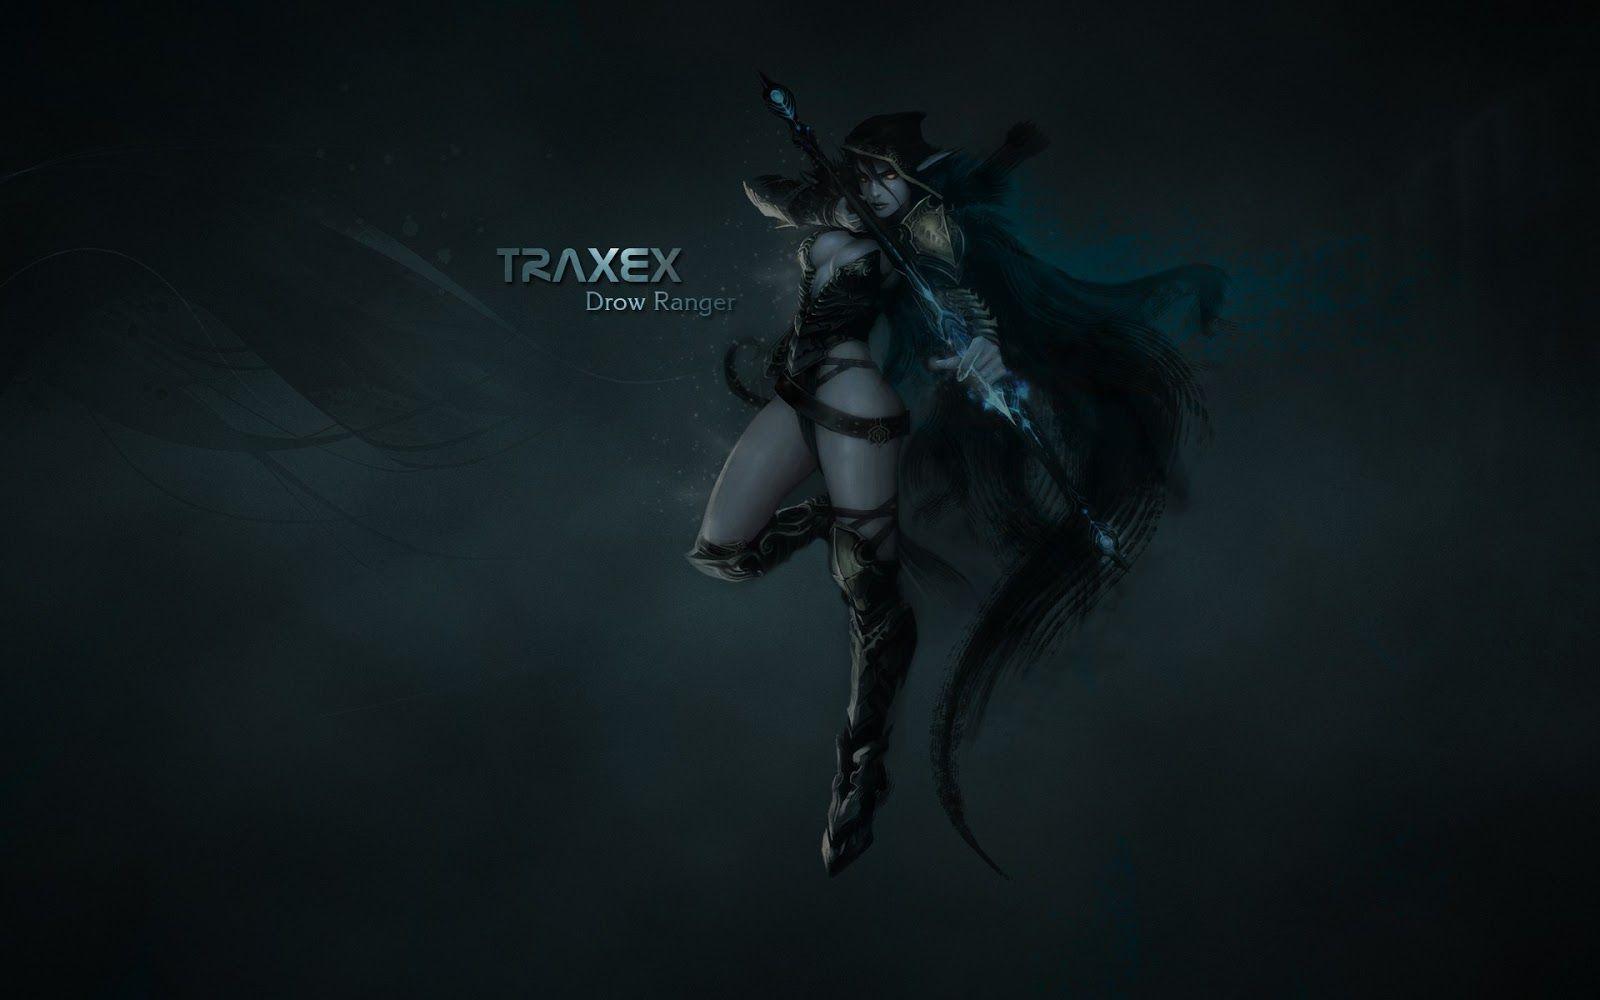 Traxex: The Drow Ranger Wallpaper, more /drow